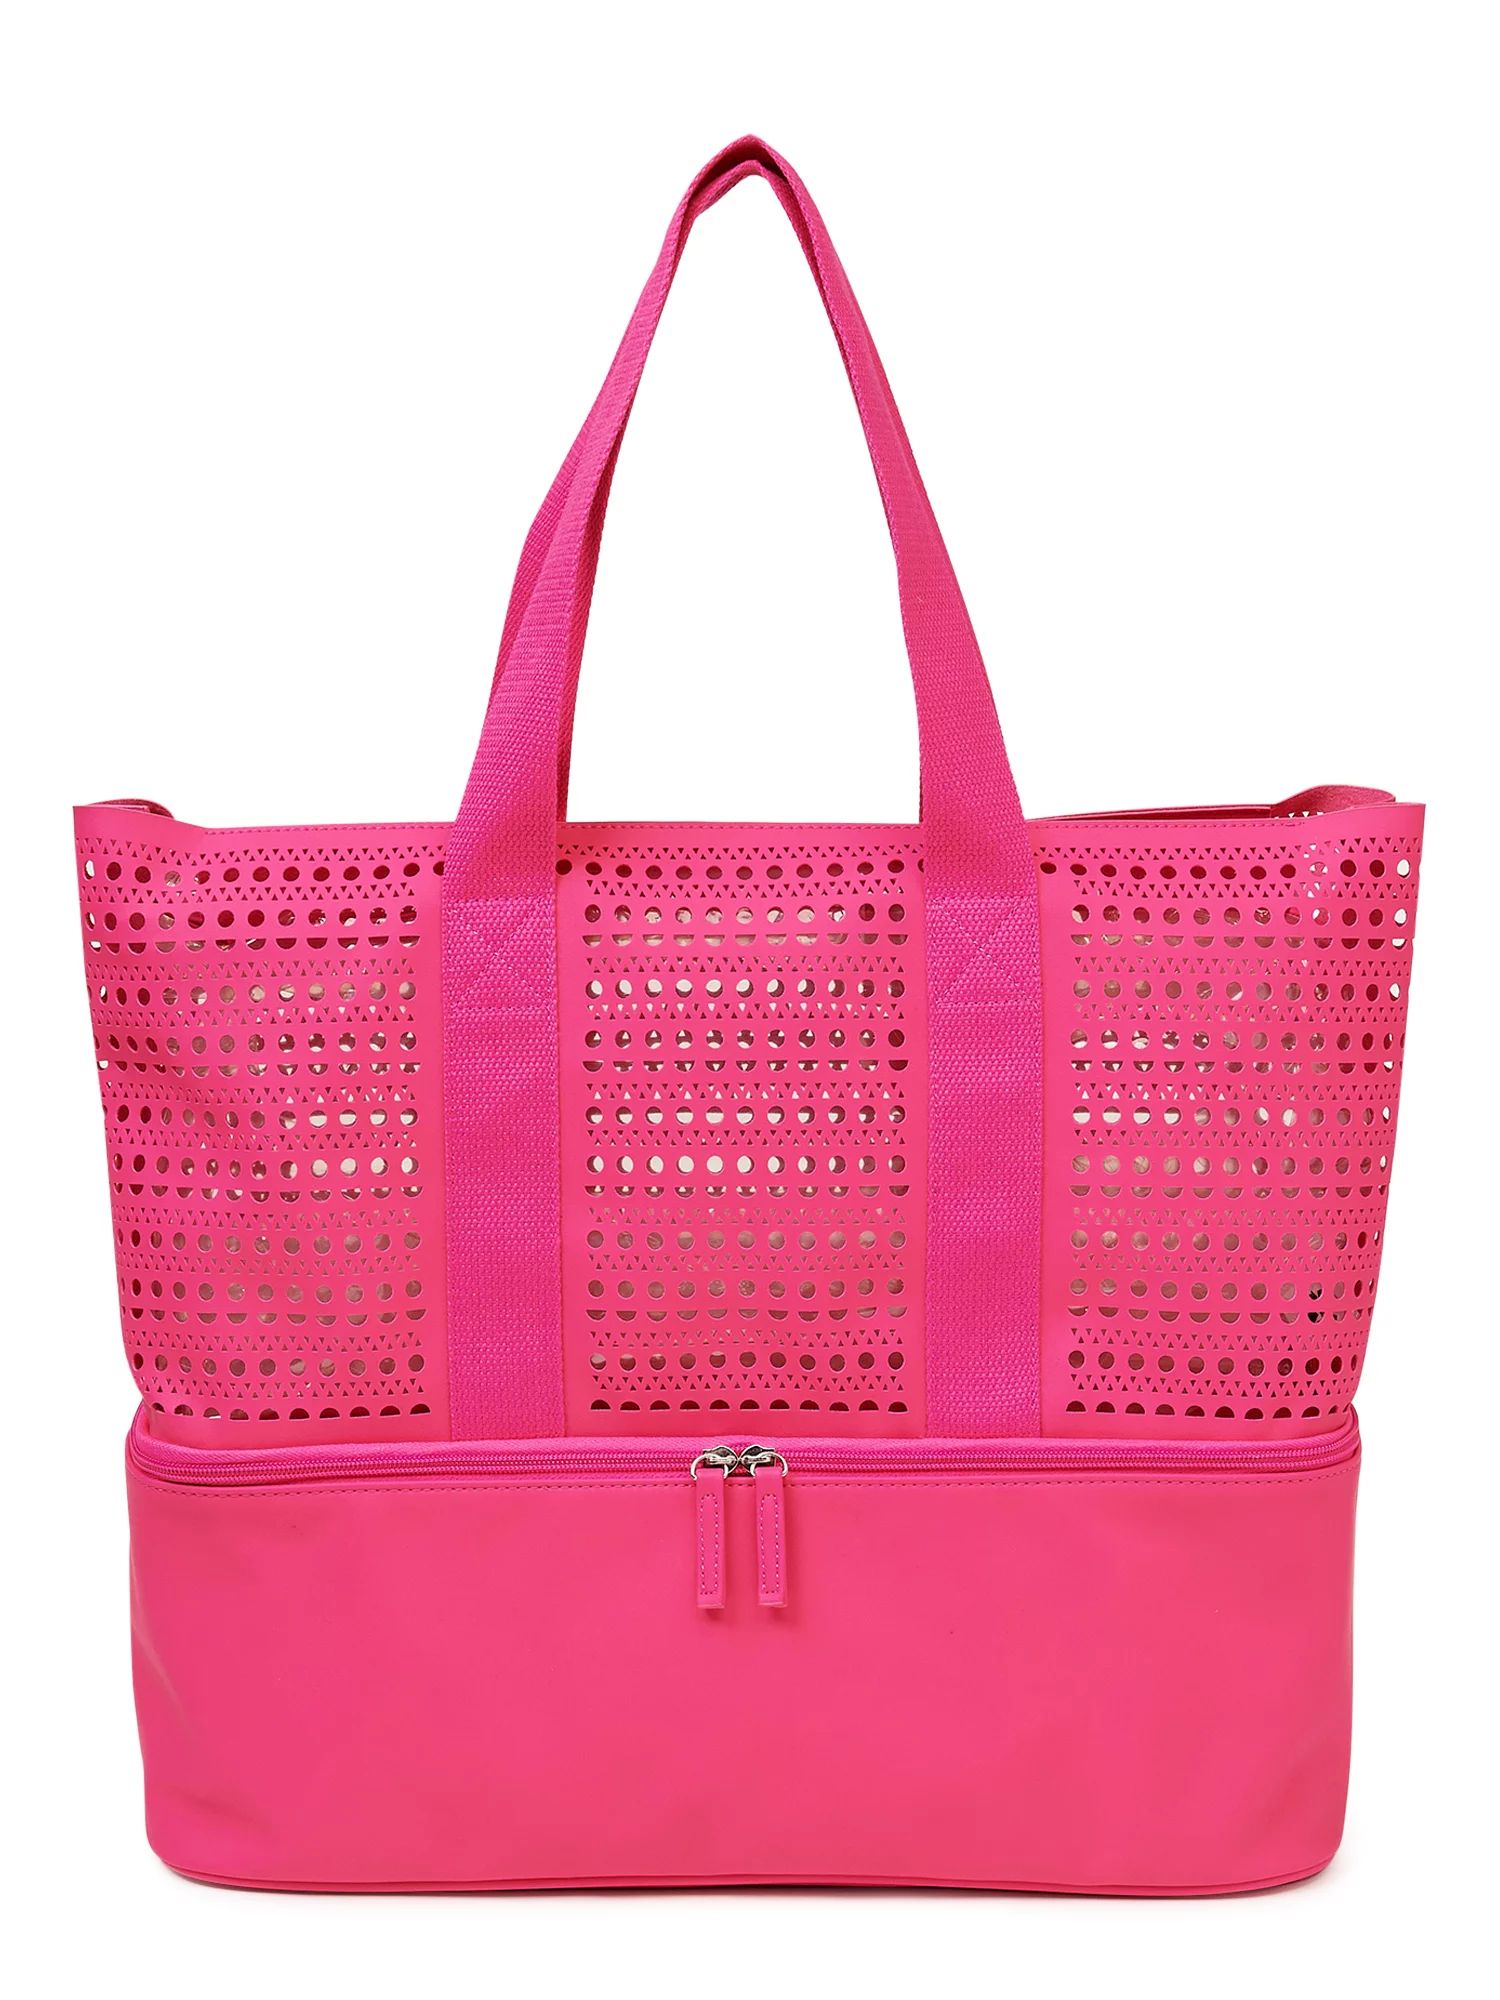 No Boundaries Women’s Zip Bottom Beach Tote Handbag, Pink Perforated | Walmart (US)